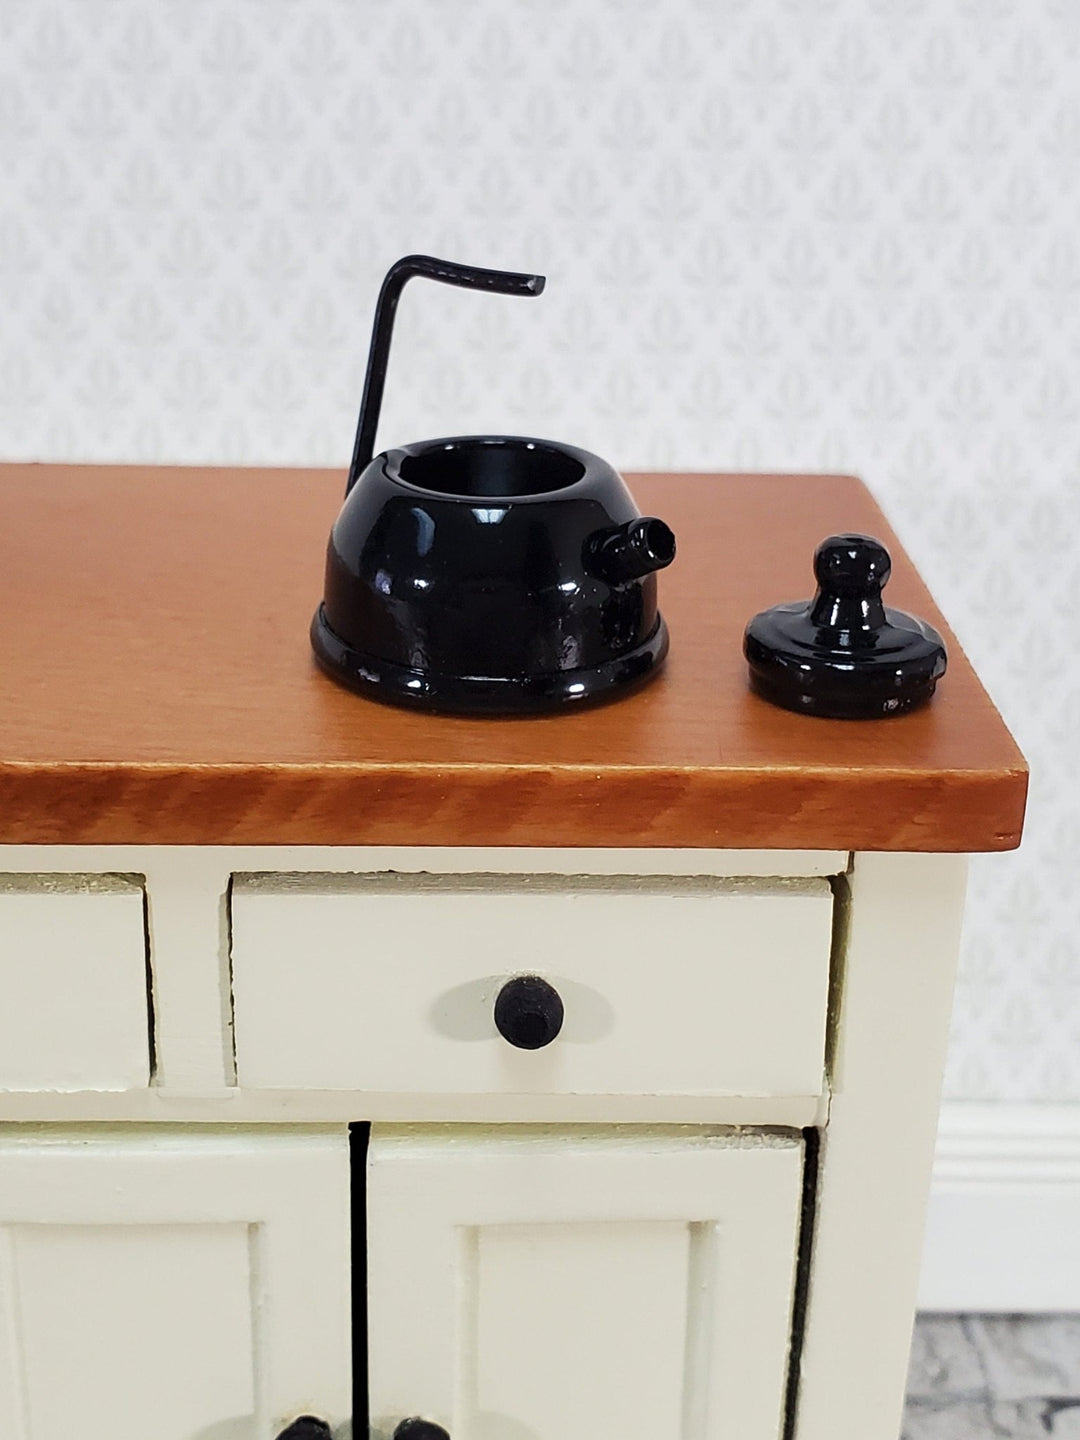 Dollhouse Miniature Teapot Kettle Modern Black with Lid 1:12 Scale Kitchen Accessories - Miniature Crush